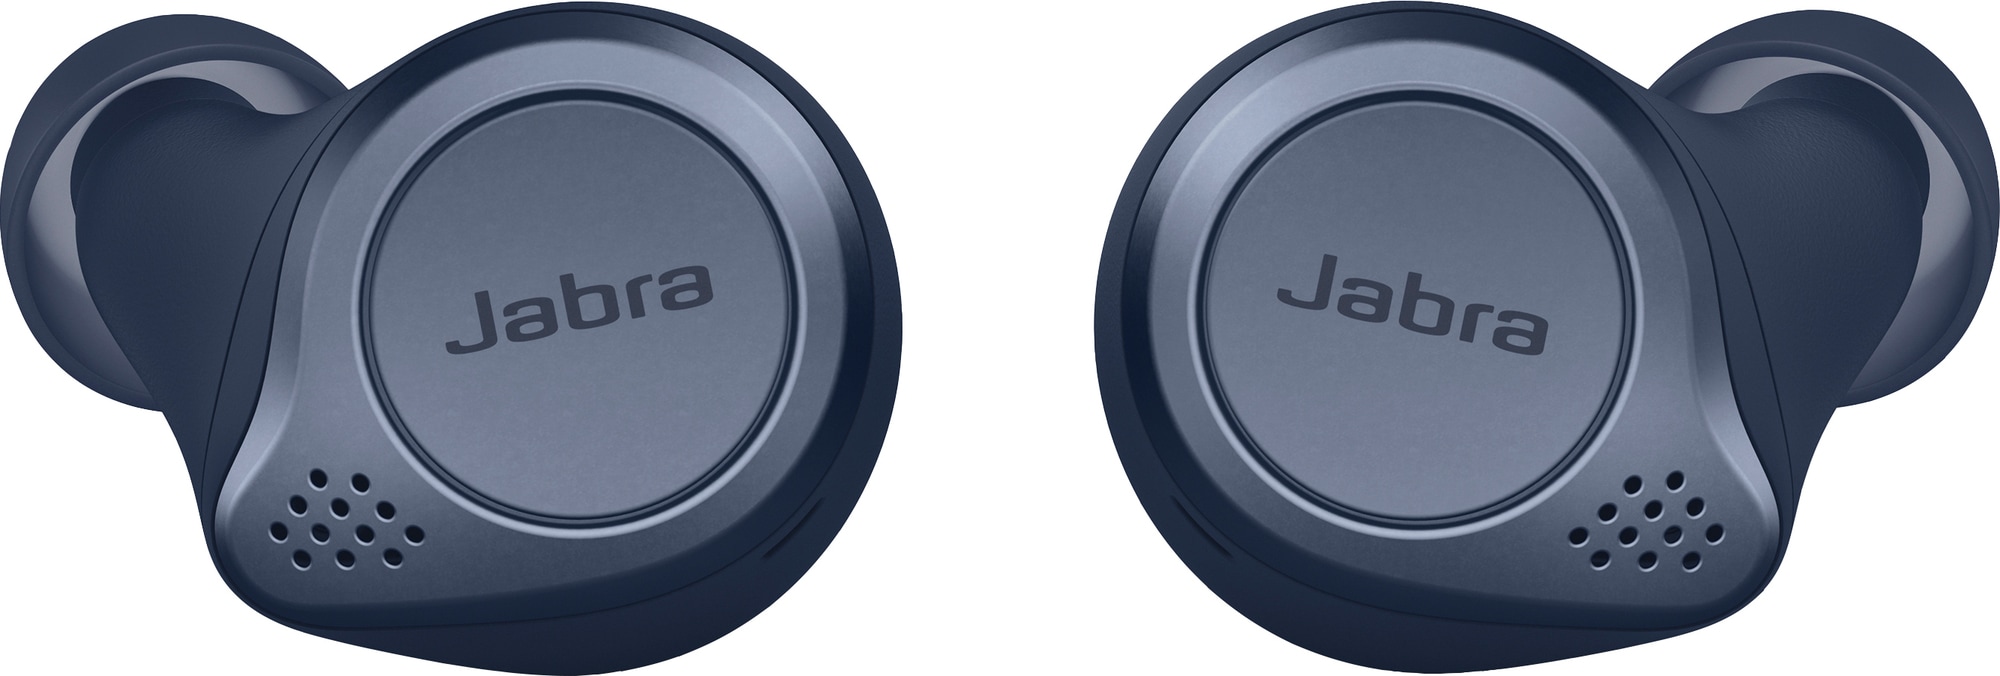 Jabra Elite Active 75t helt trådløse hodetelefoner (marineblå) -  Hodetelefoner til trening - Elkjøp